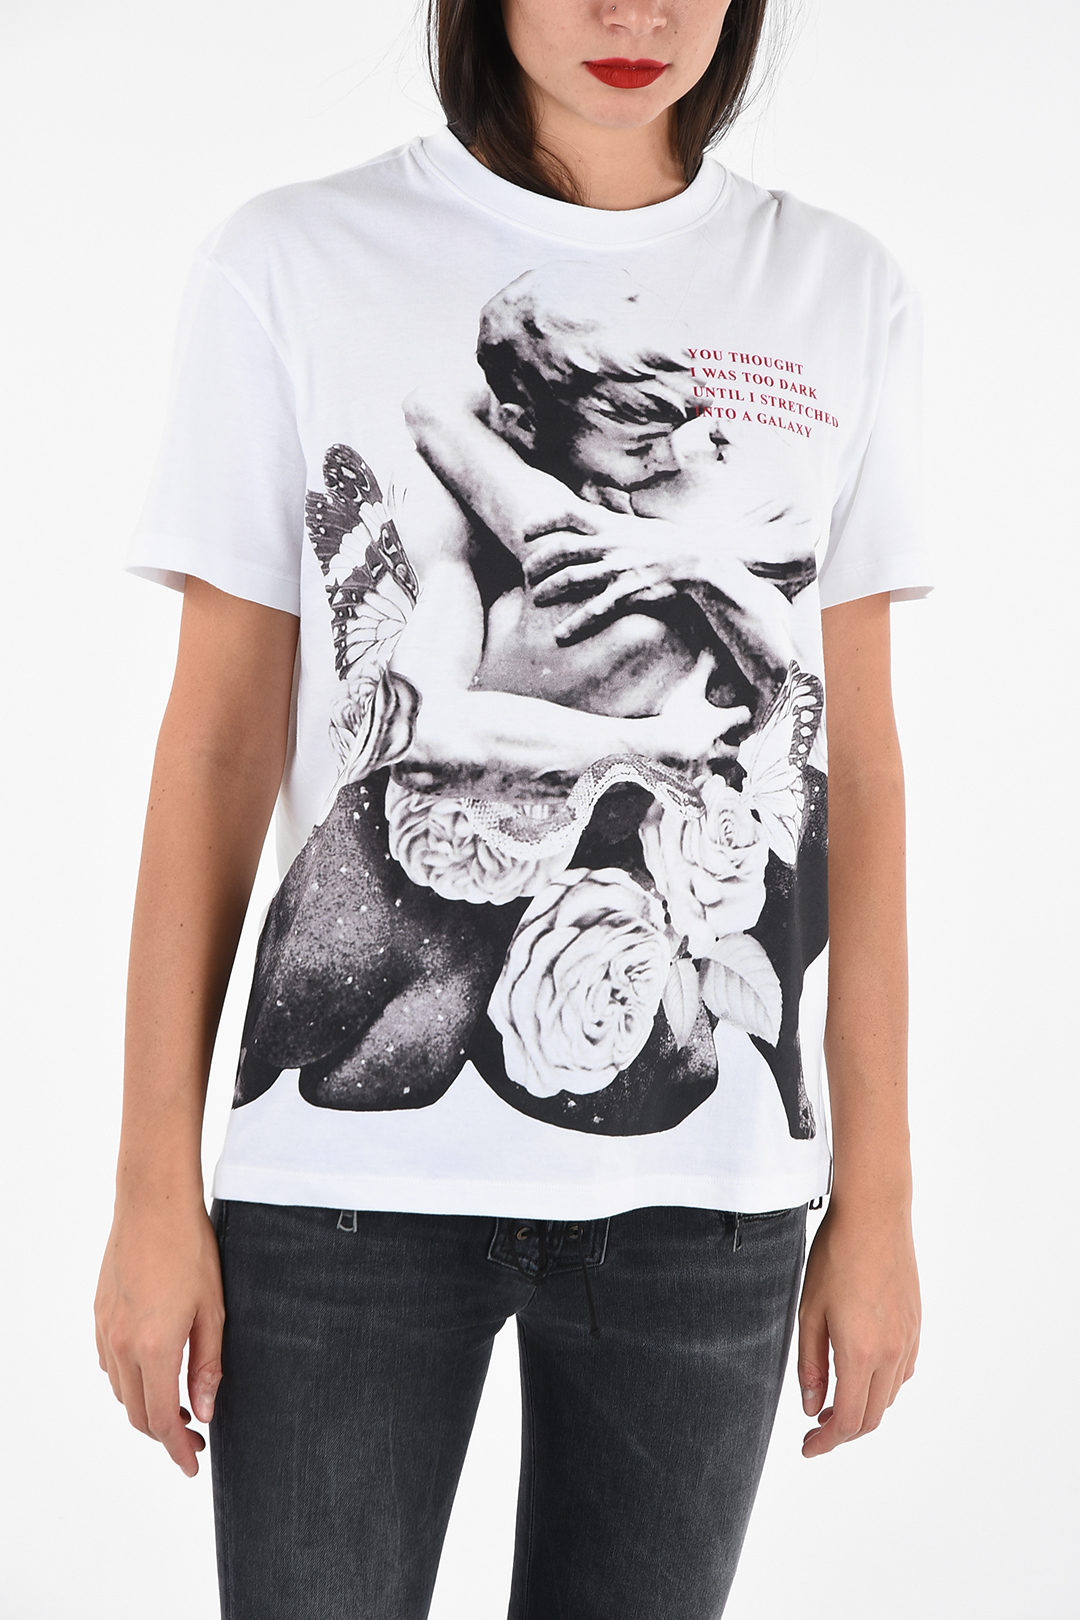 Valentino UNDERCOVER JUN TAKAHASHI printed t-shirt women - Glamood Outlet